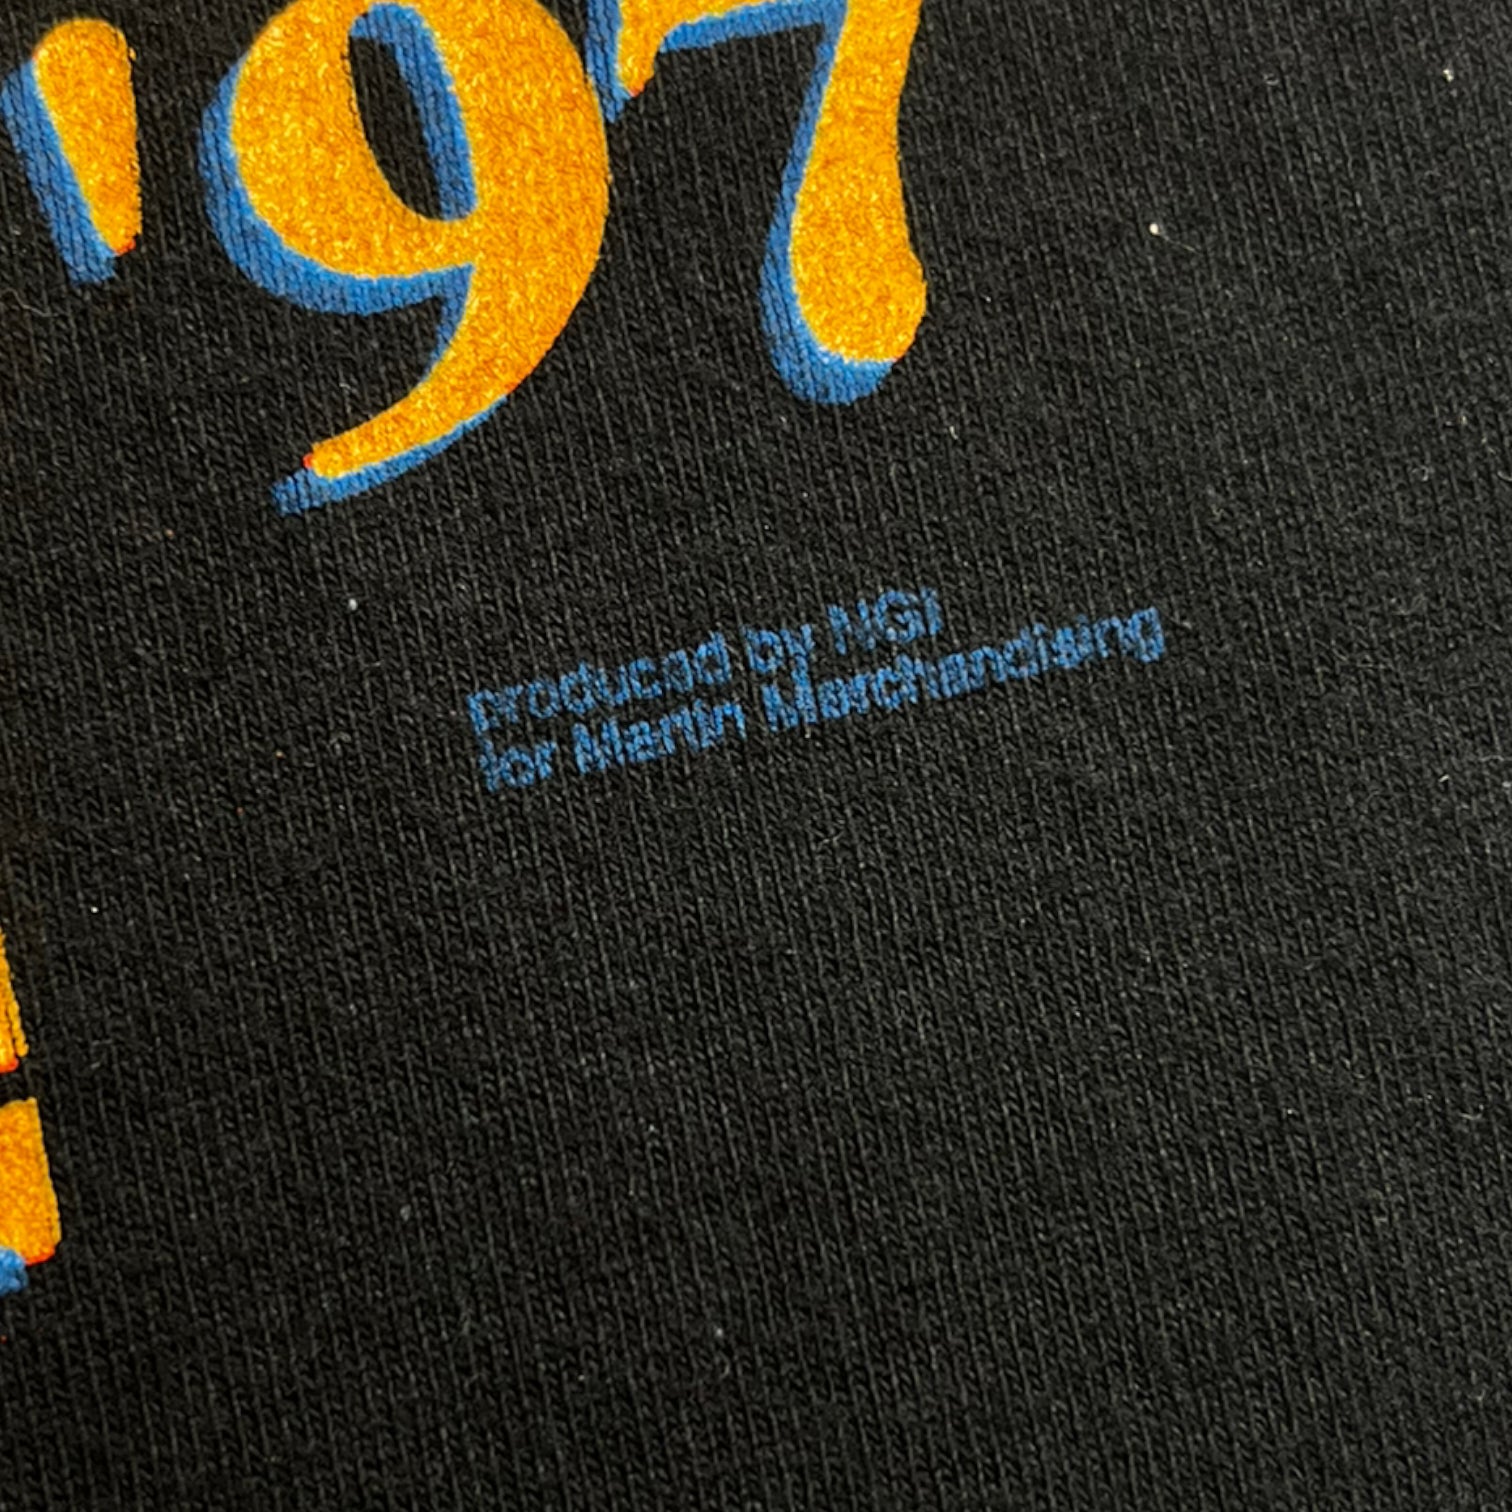 1997 Mindy McCready “Guys Do It All The Time” T-Shirt